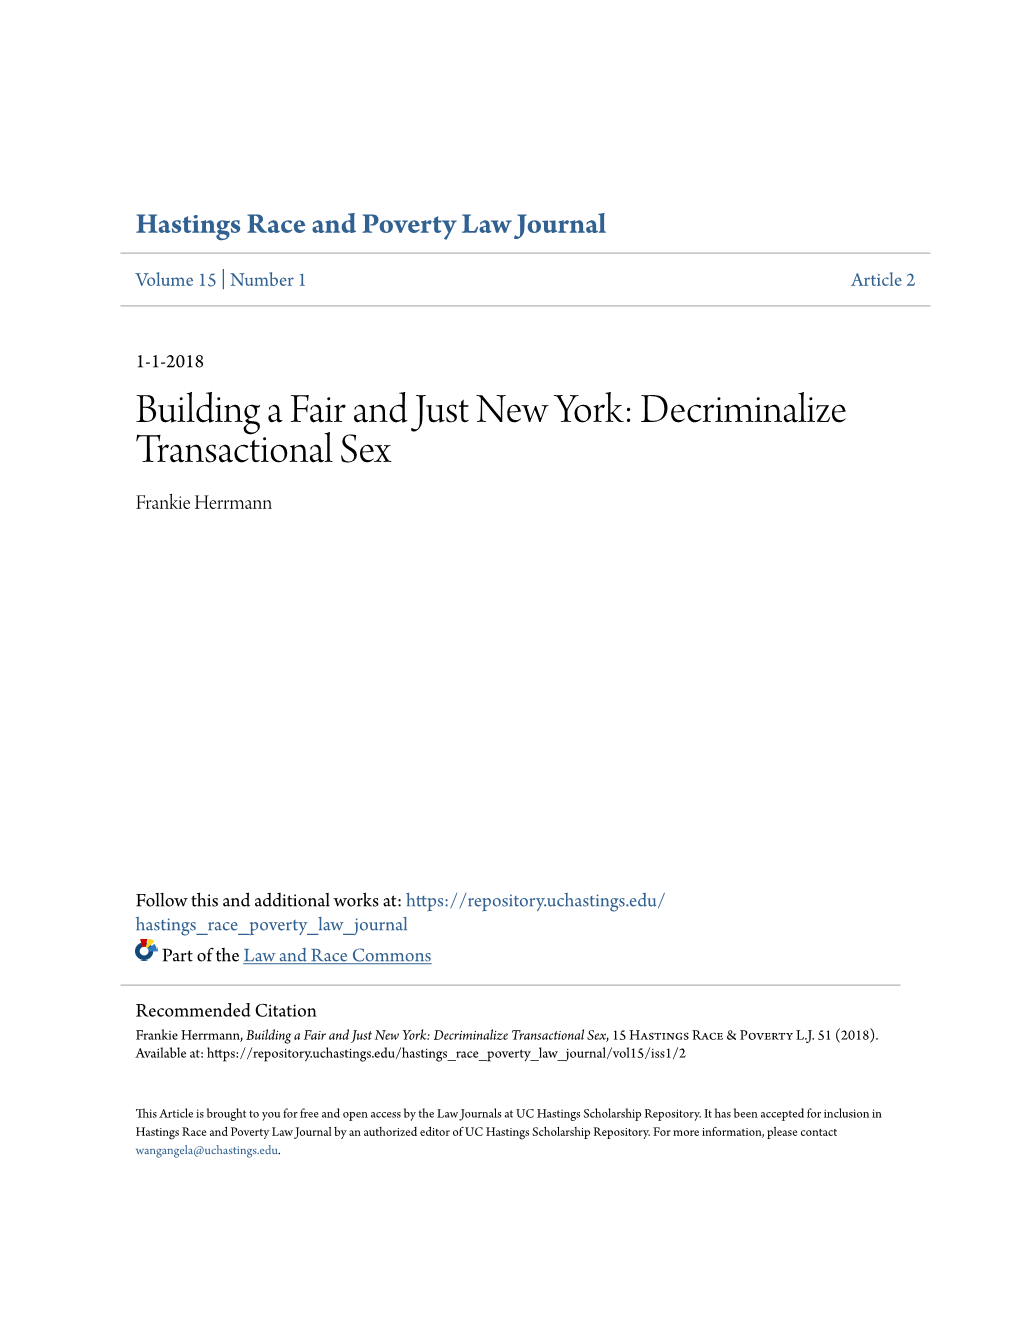 Building a Fair and Just New York: Decriminalize Transactional Sex Frankie Herrmann